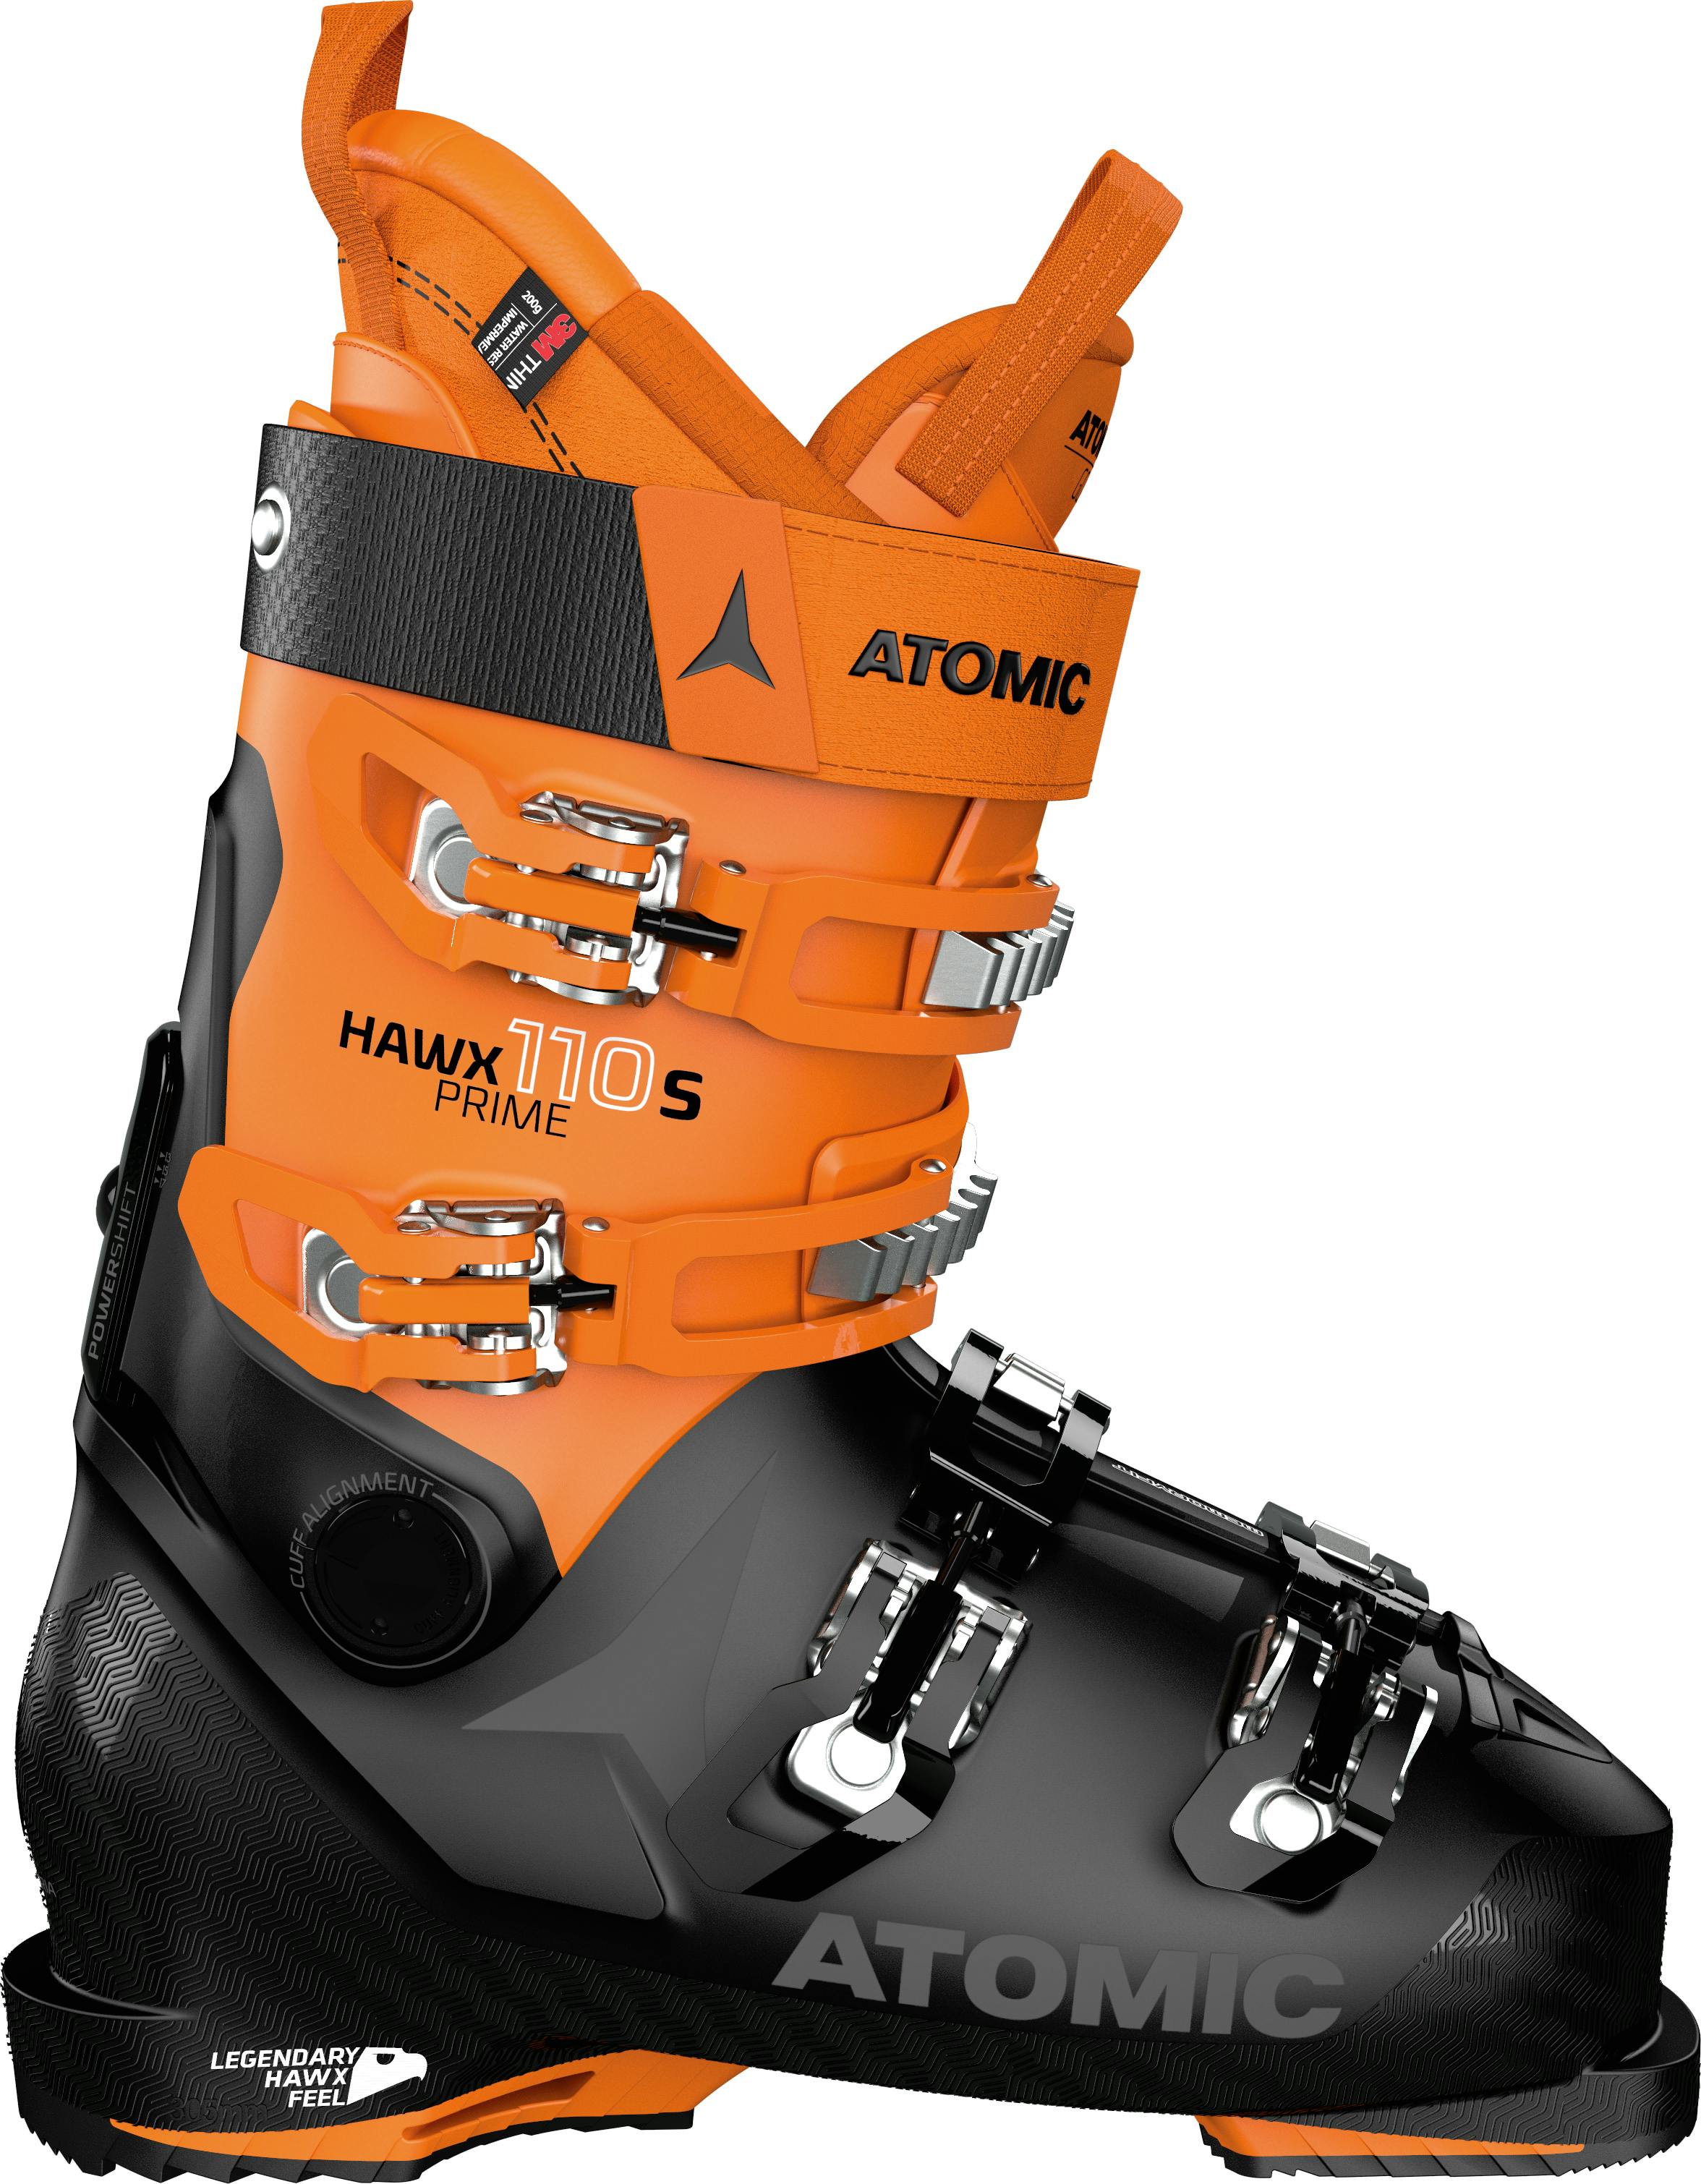 Atomic Hawx Prime 110 S Ski Boots · 2021